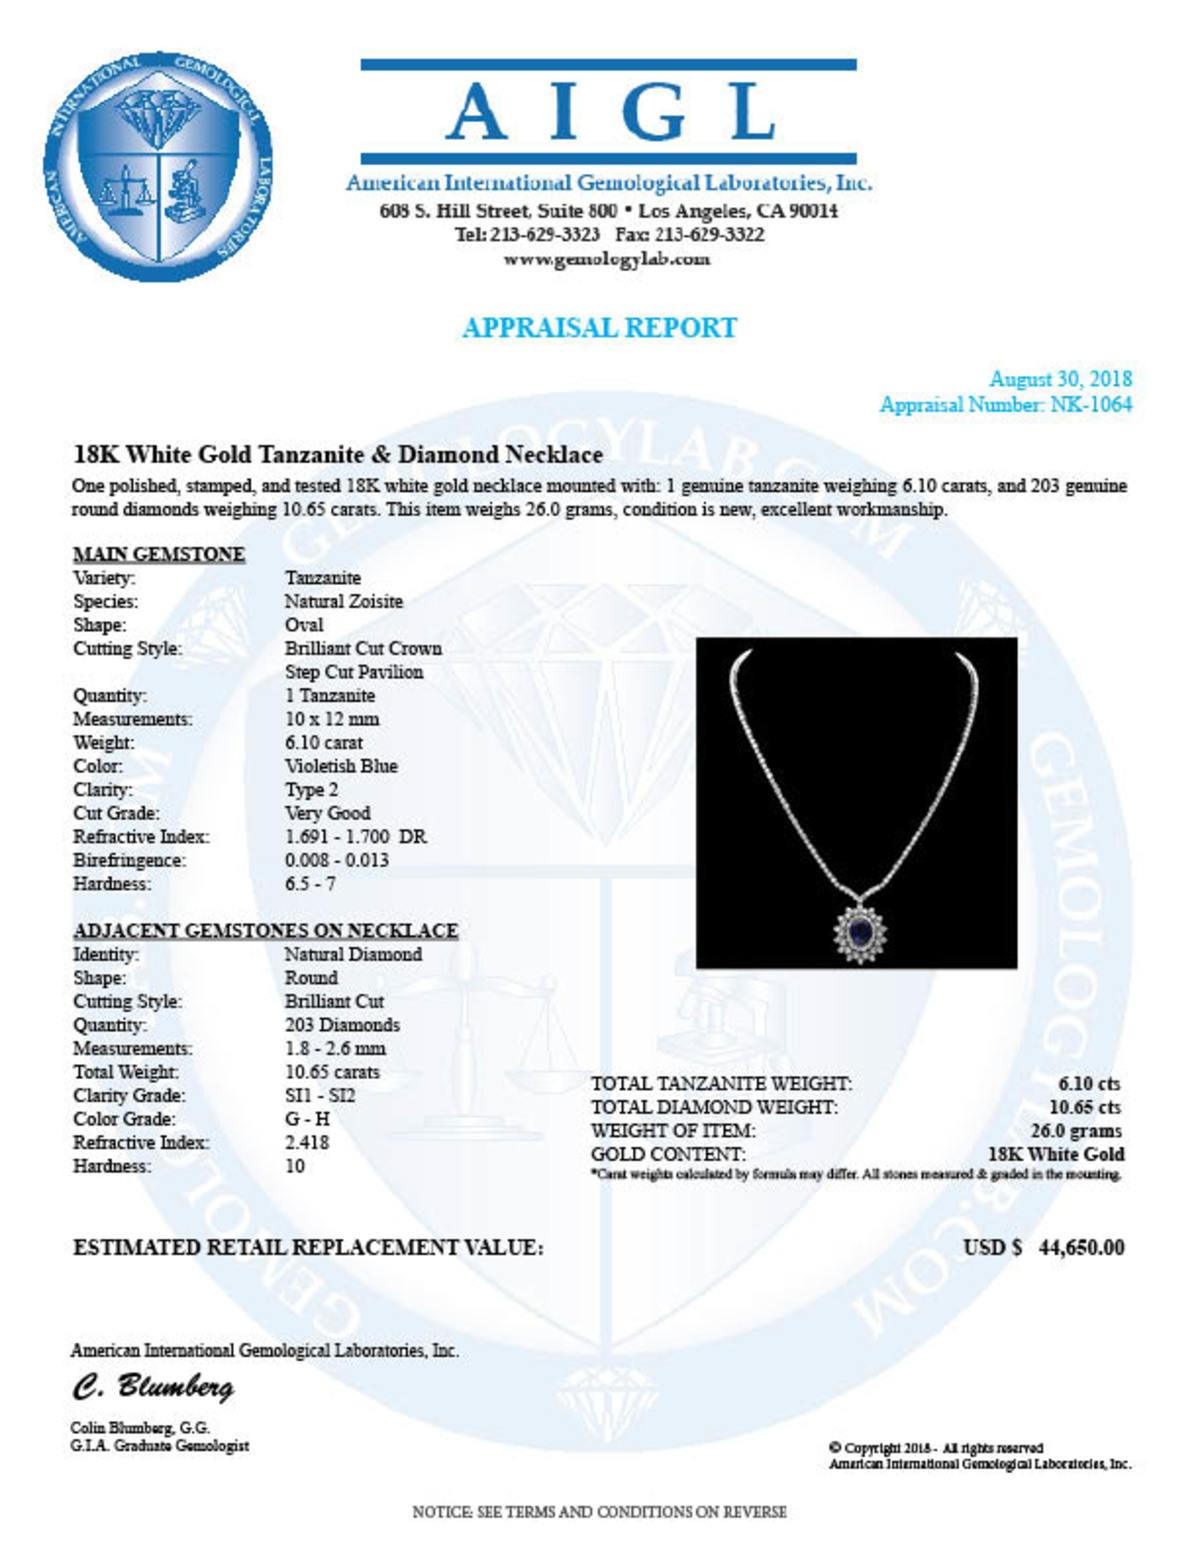 18K White Gold 6.10ct Tanzanite 10.65ct Diamond Necklace